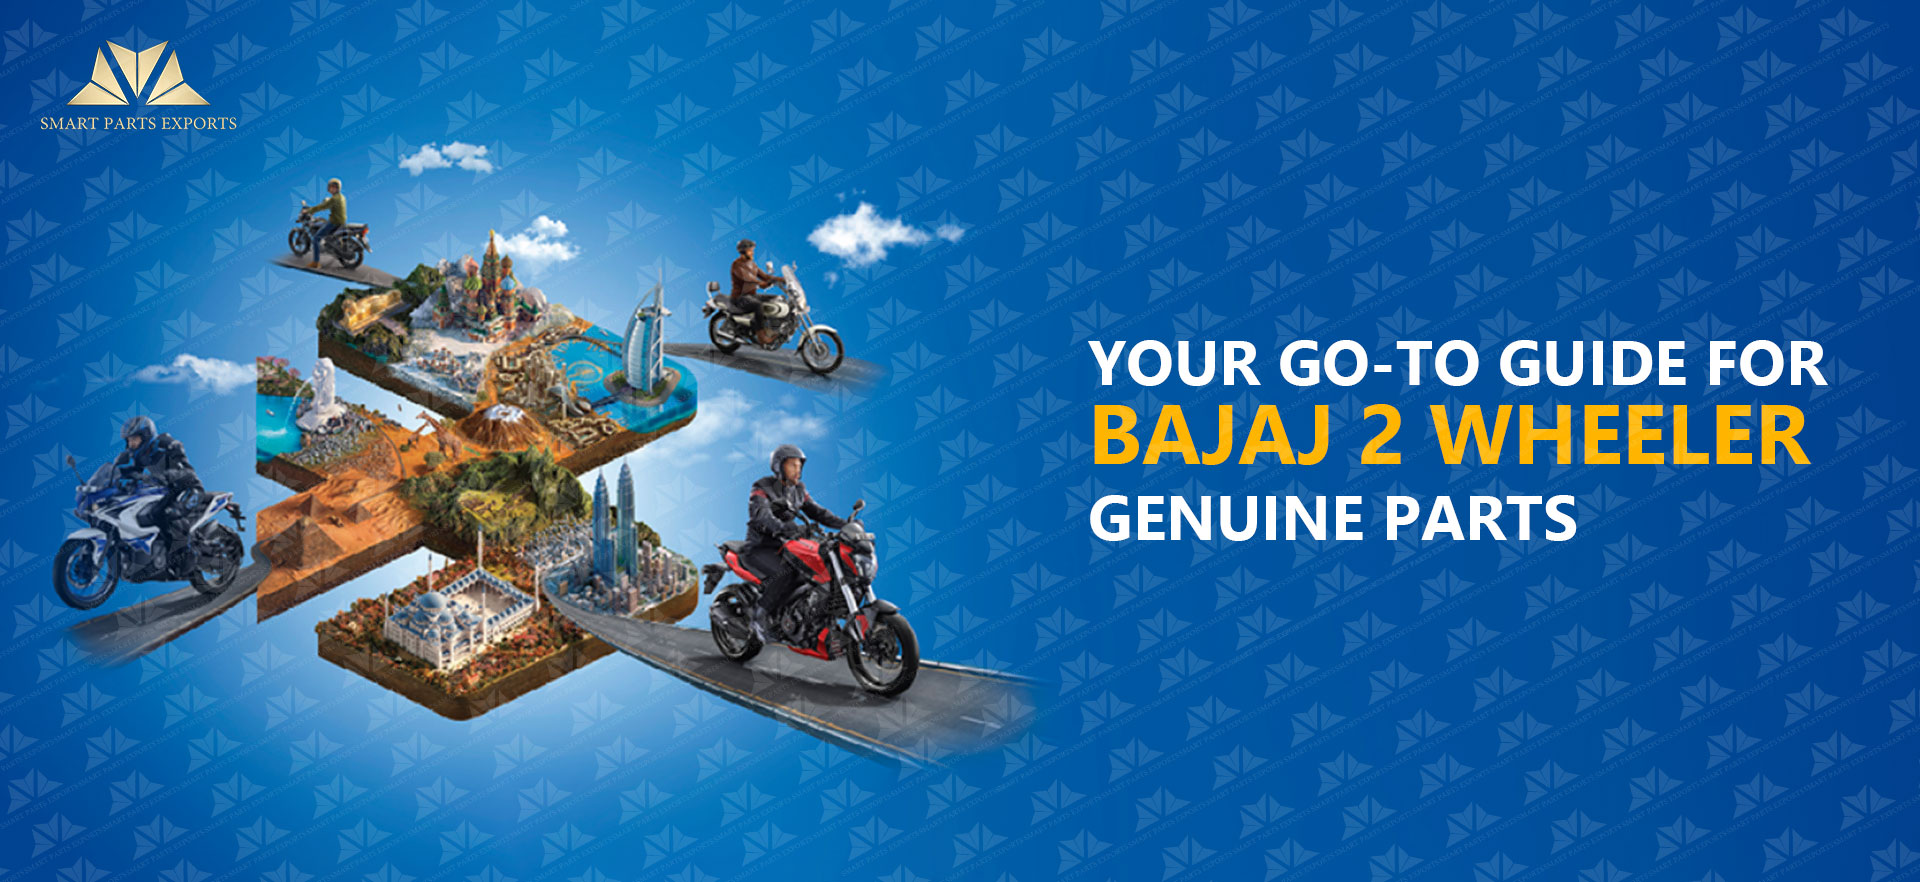 Your Go-To Guide for Bajaj 2 Wheeler Genuine Parts